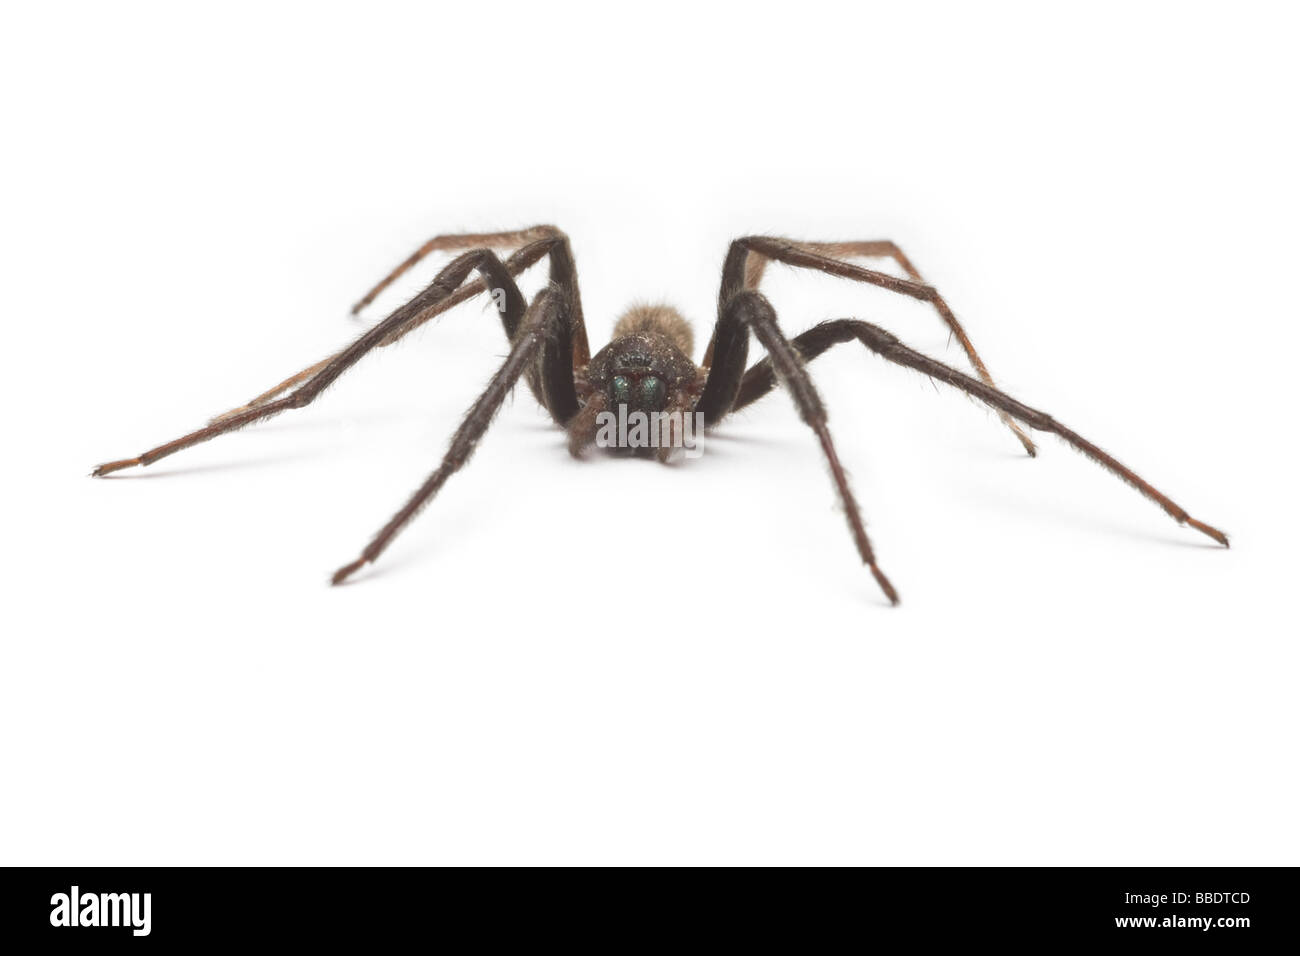 Una casa spider (Tegenaria gigantea), fotografato in studio. Tégénaire (Tegenaria gigantea), photographiée en studio. Foto Stock